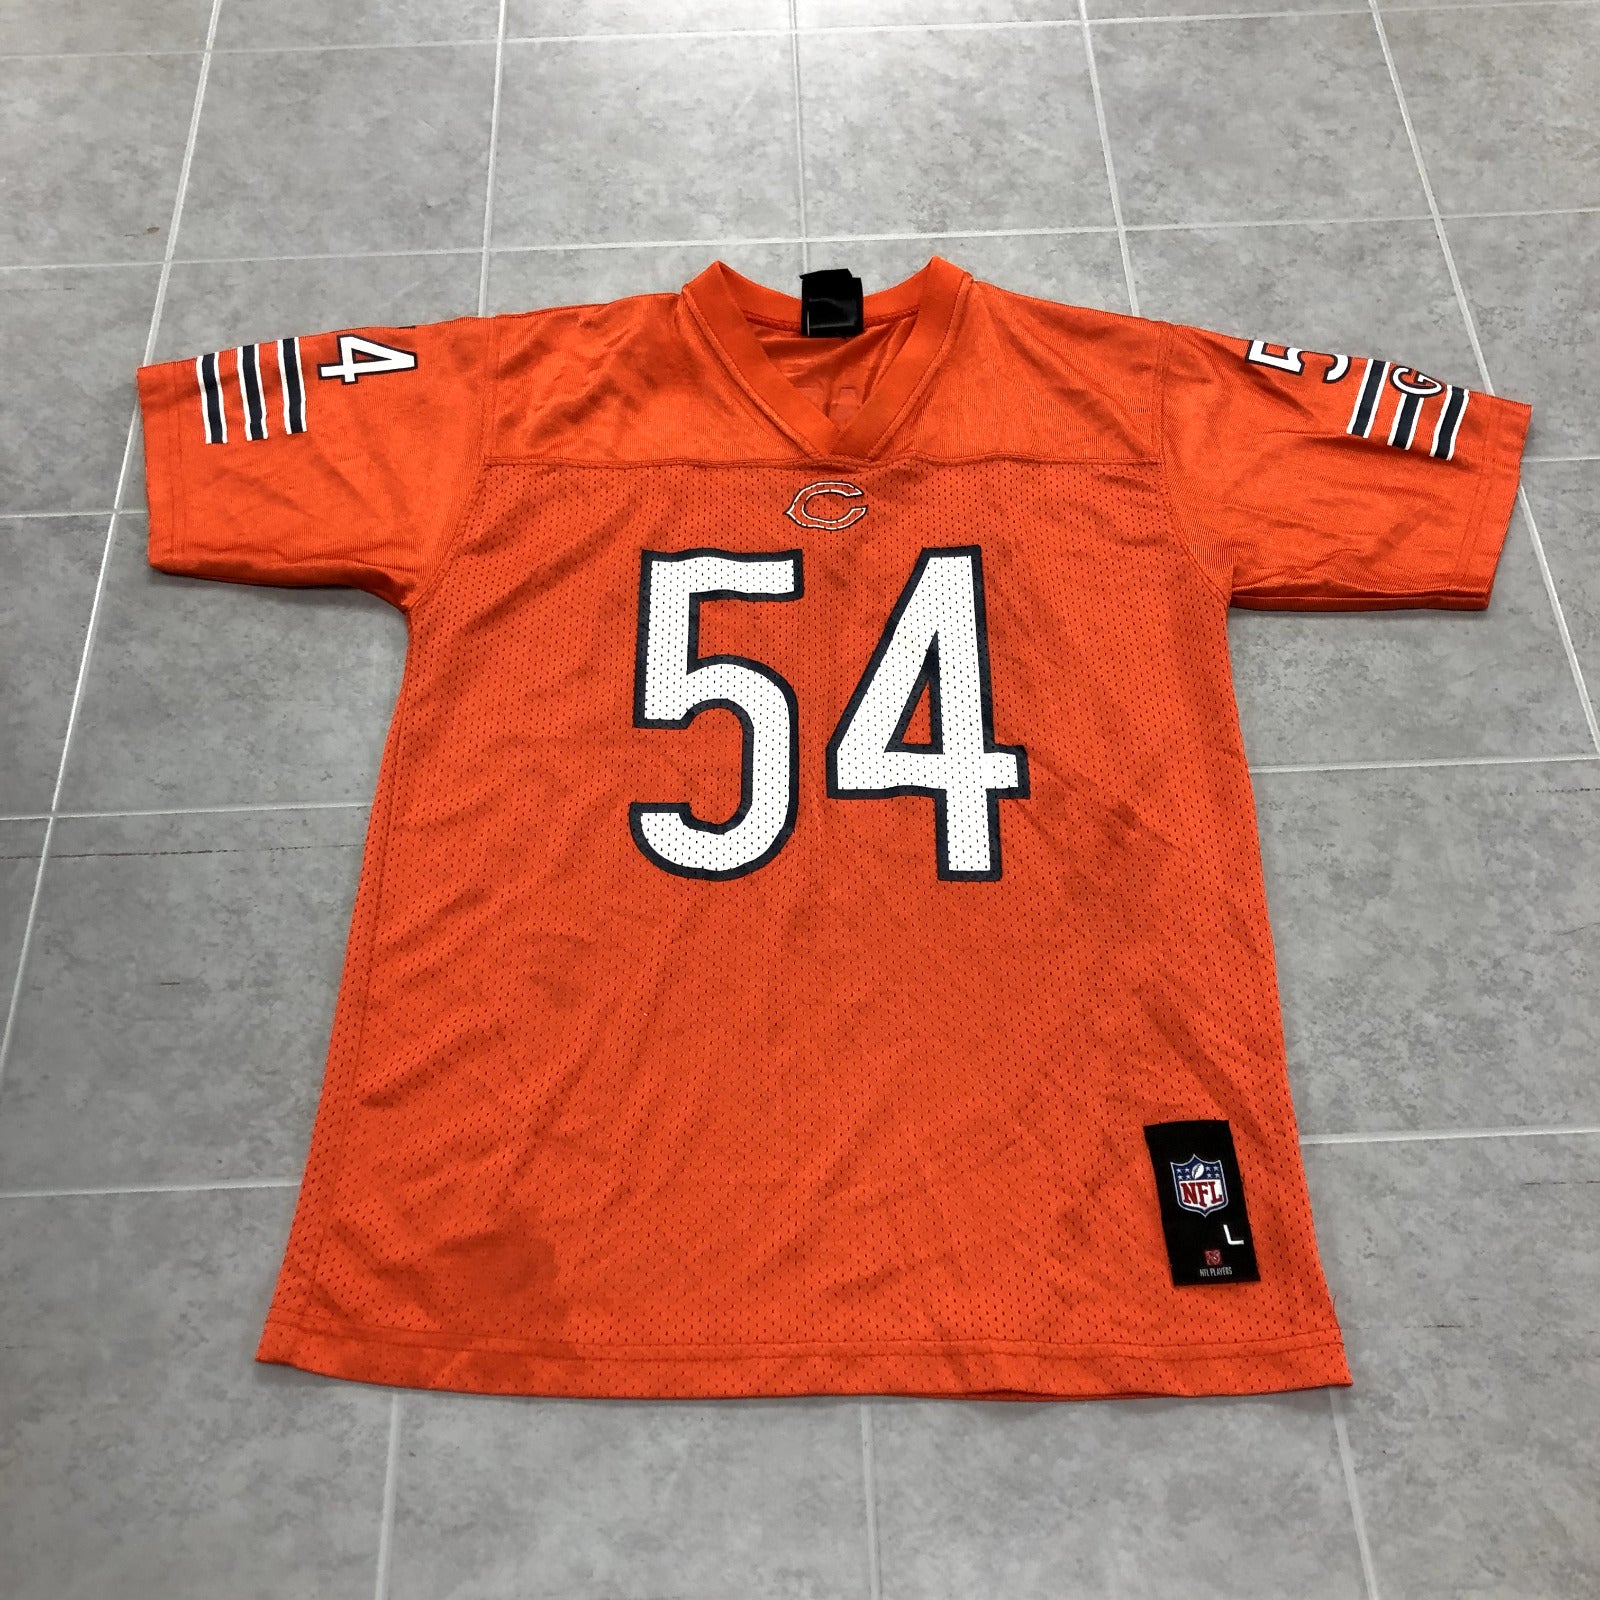 NFL Team Orange Short Sleeve Graphic #54 Urlacher Bengals Jersey Adult Size L